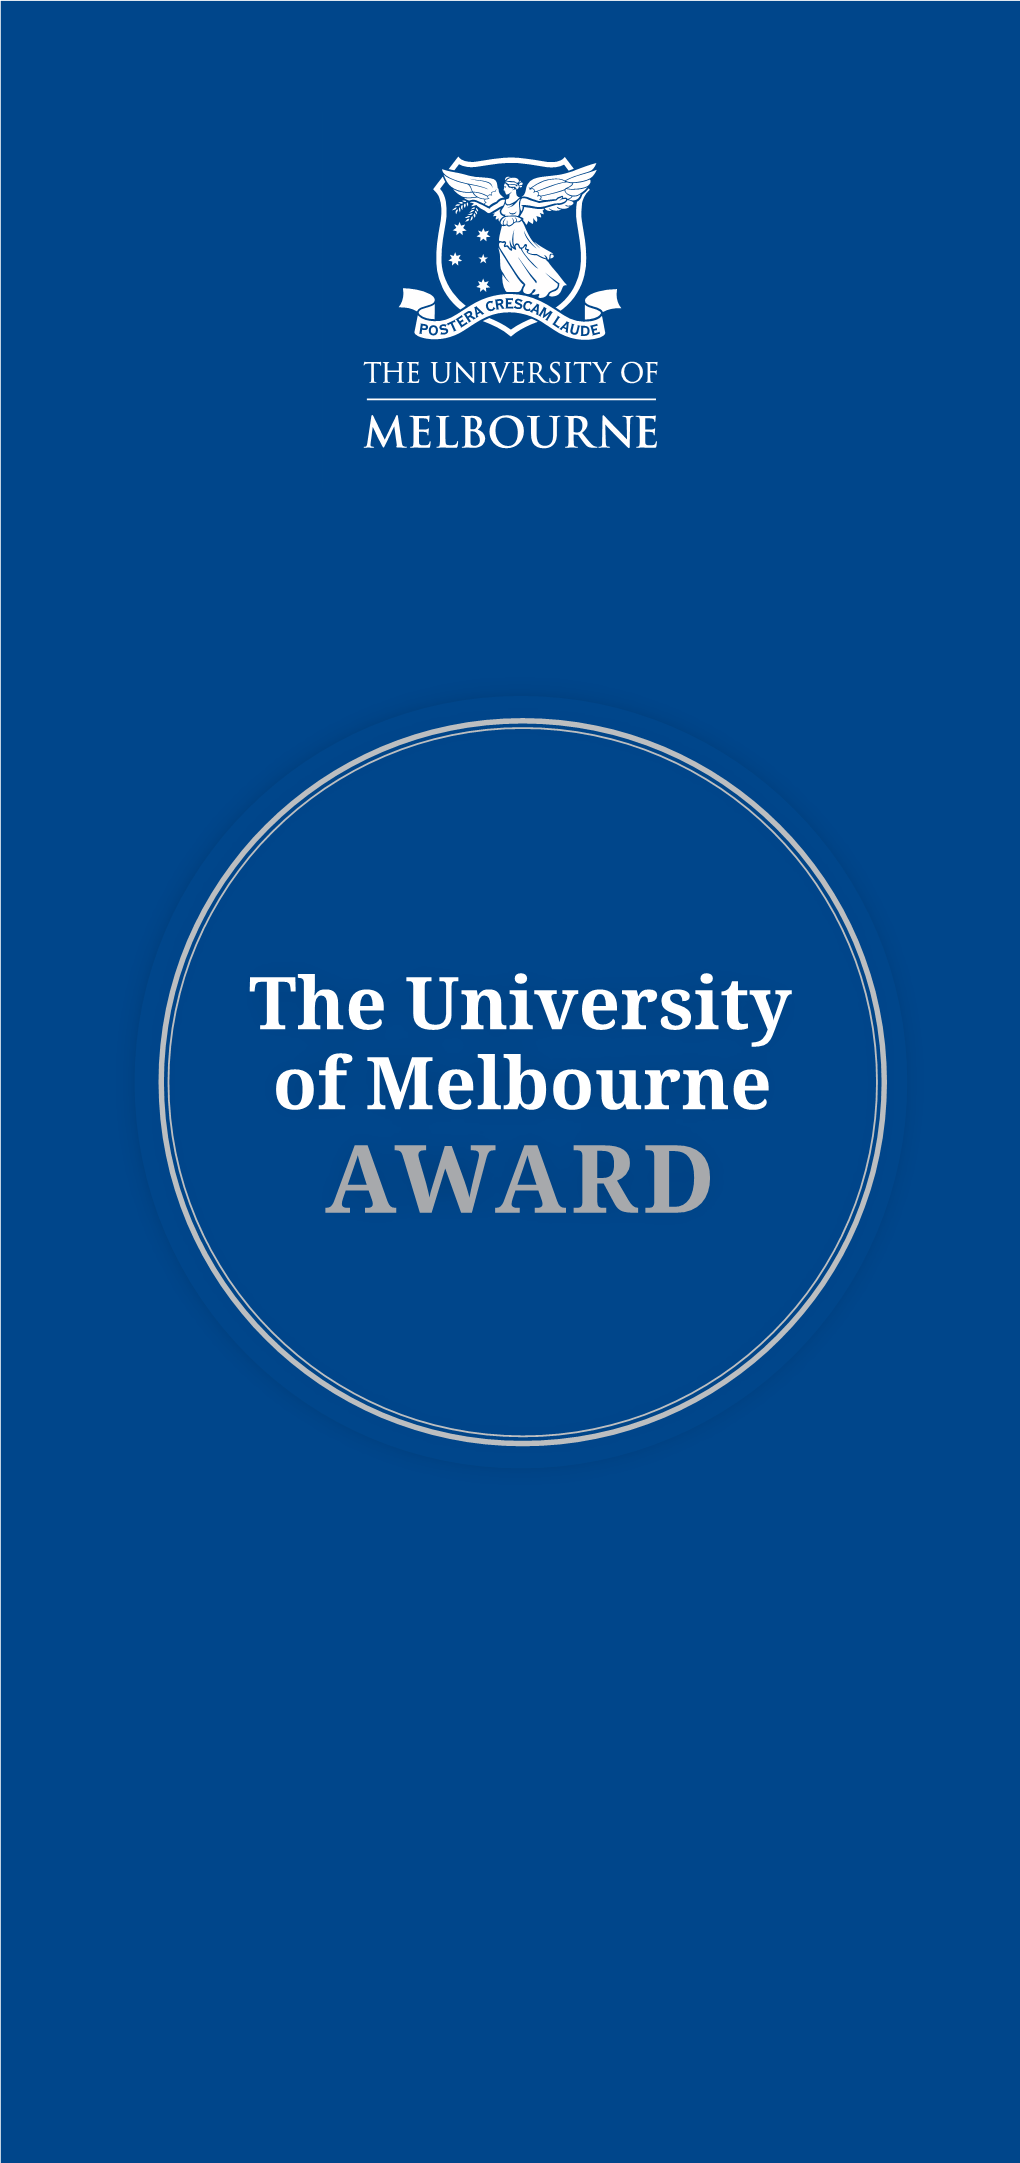 The University of Melbourne AWARD